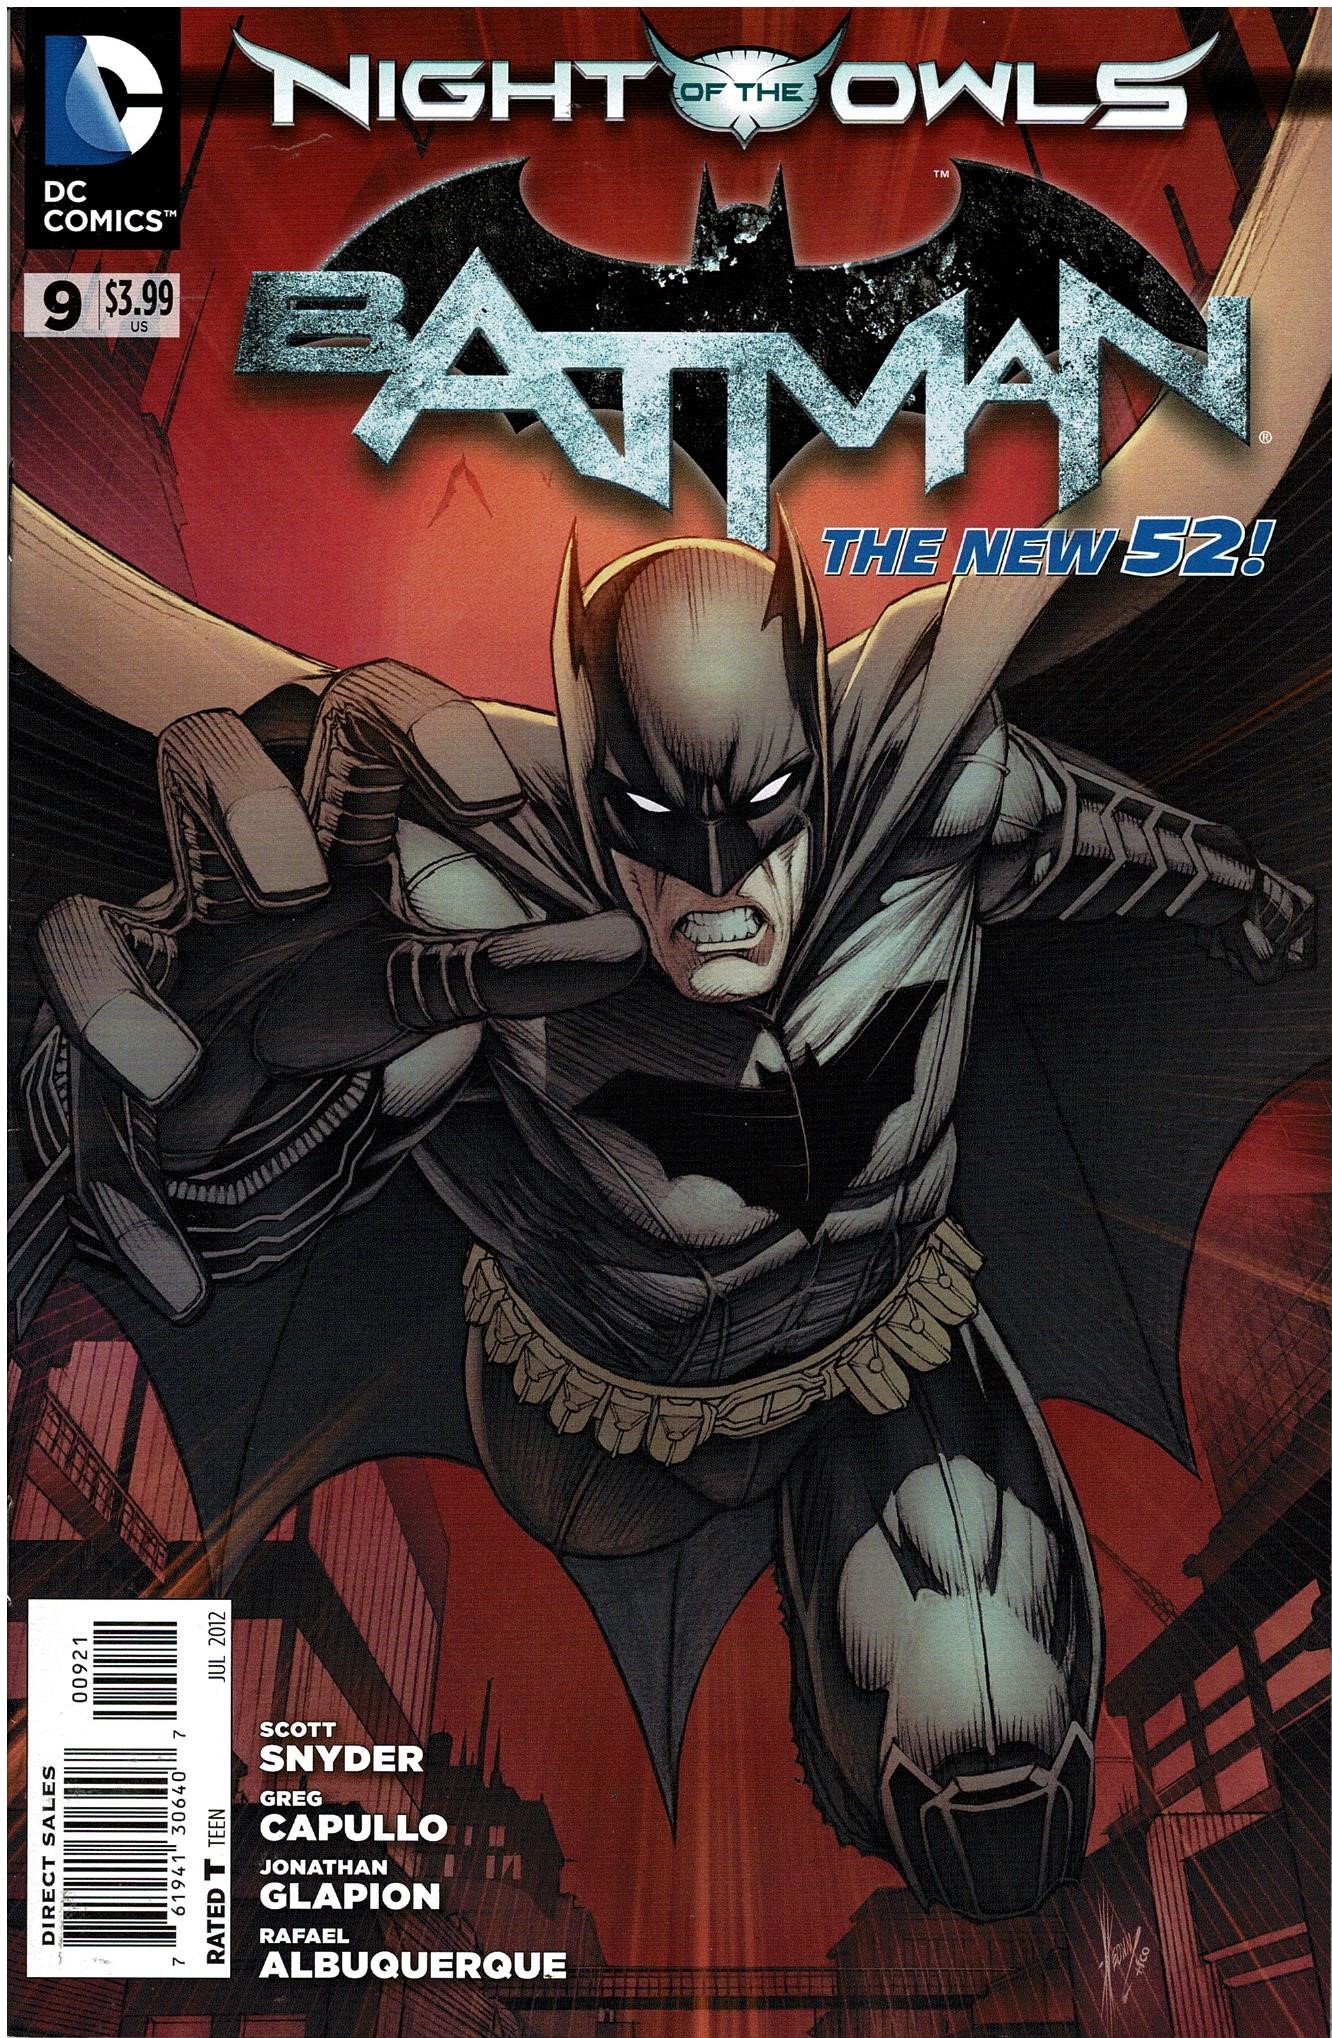 Batman #9 Variant Edition (Night of the Owls) (2011)